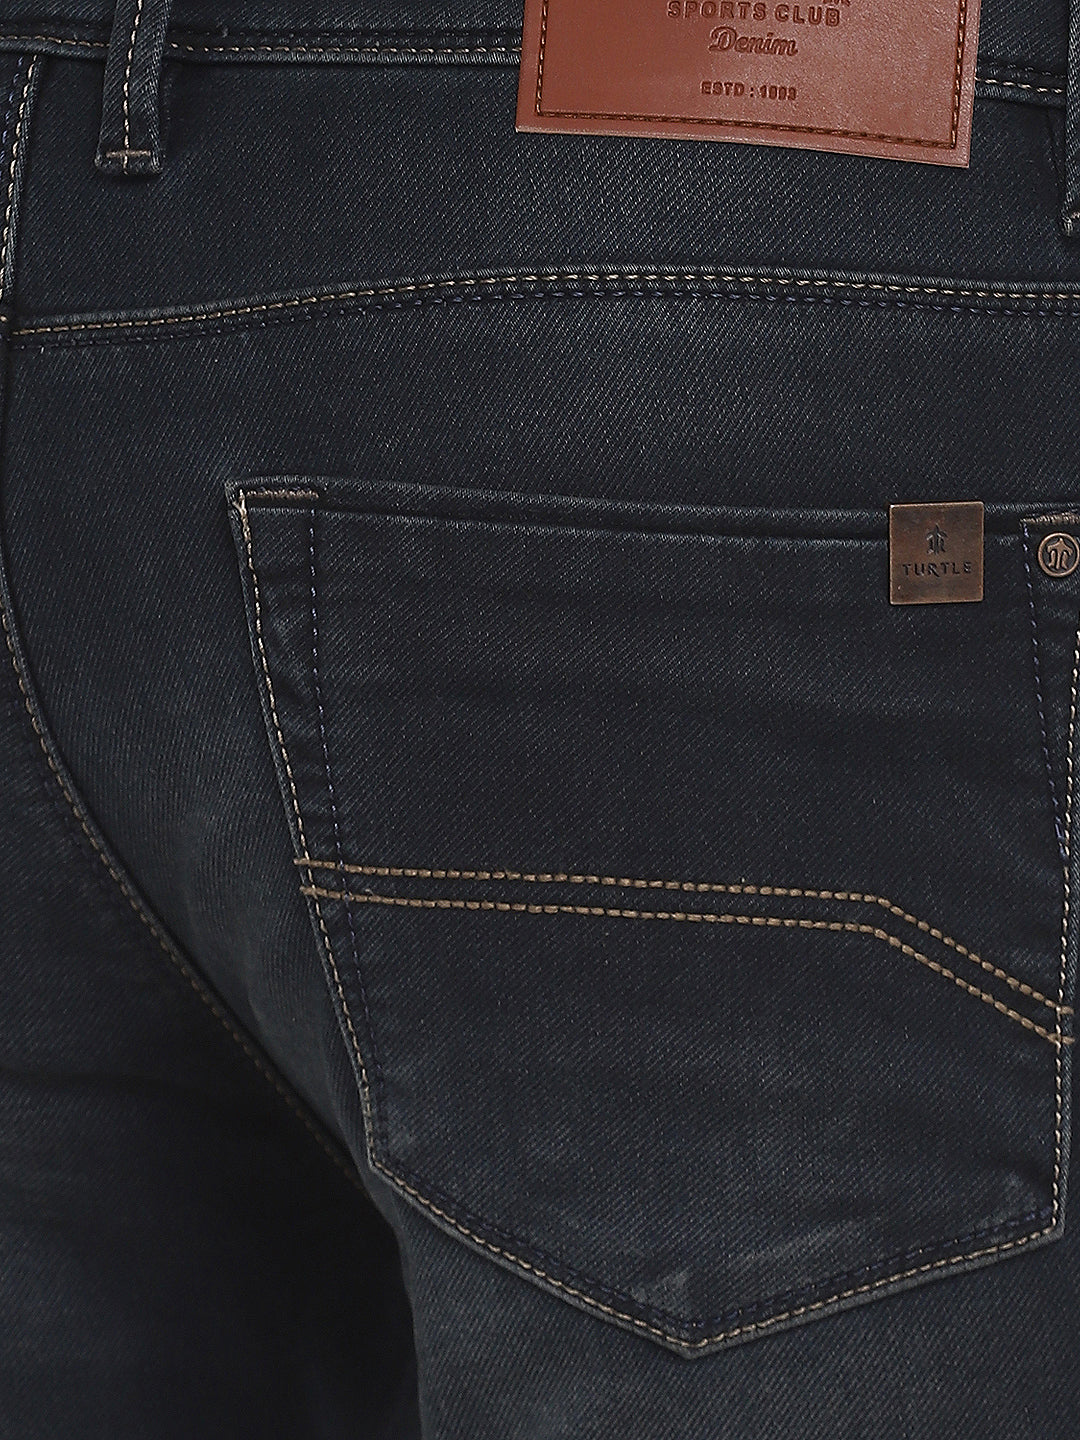 Navy Blue Cotton Stretch Narrow Fit Jeans